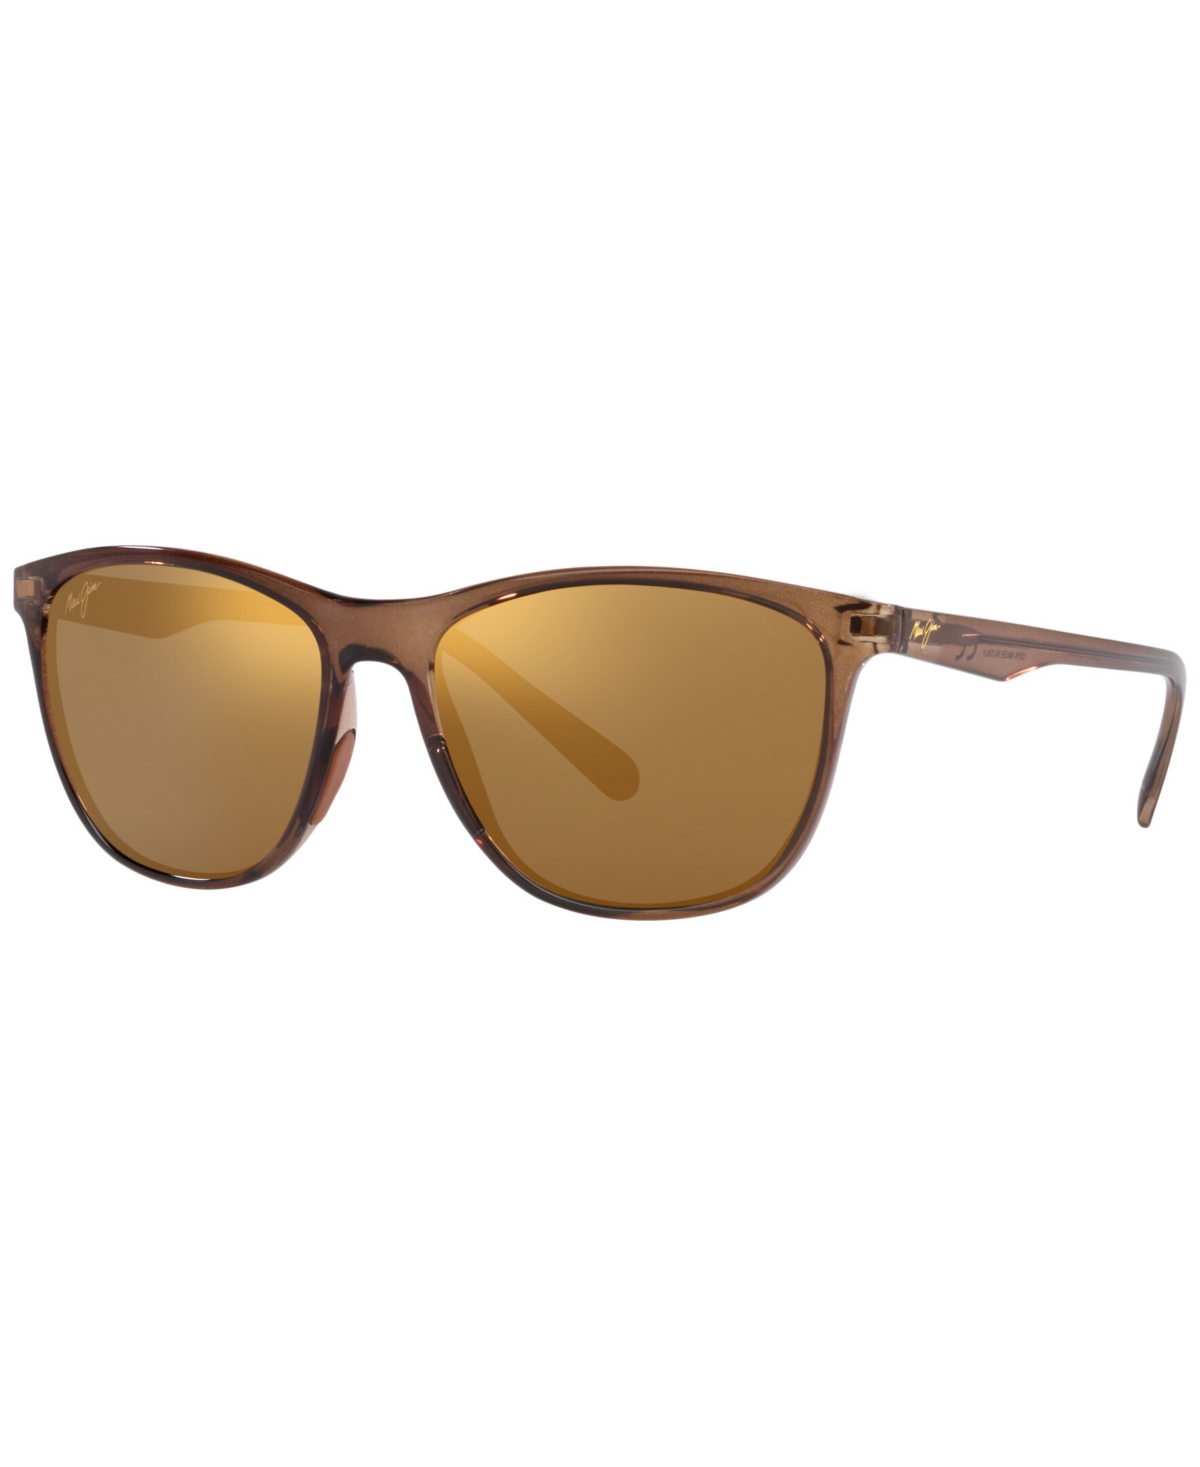 Women's Polarized Sunglasses, Sugar Cane - Brown